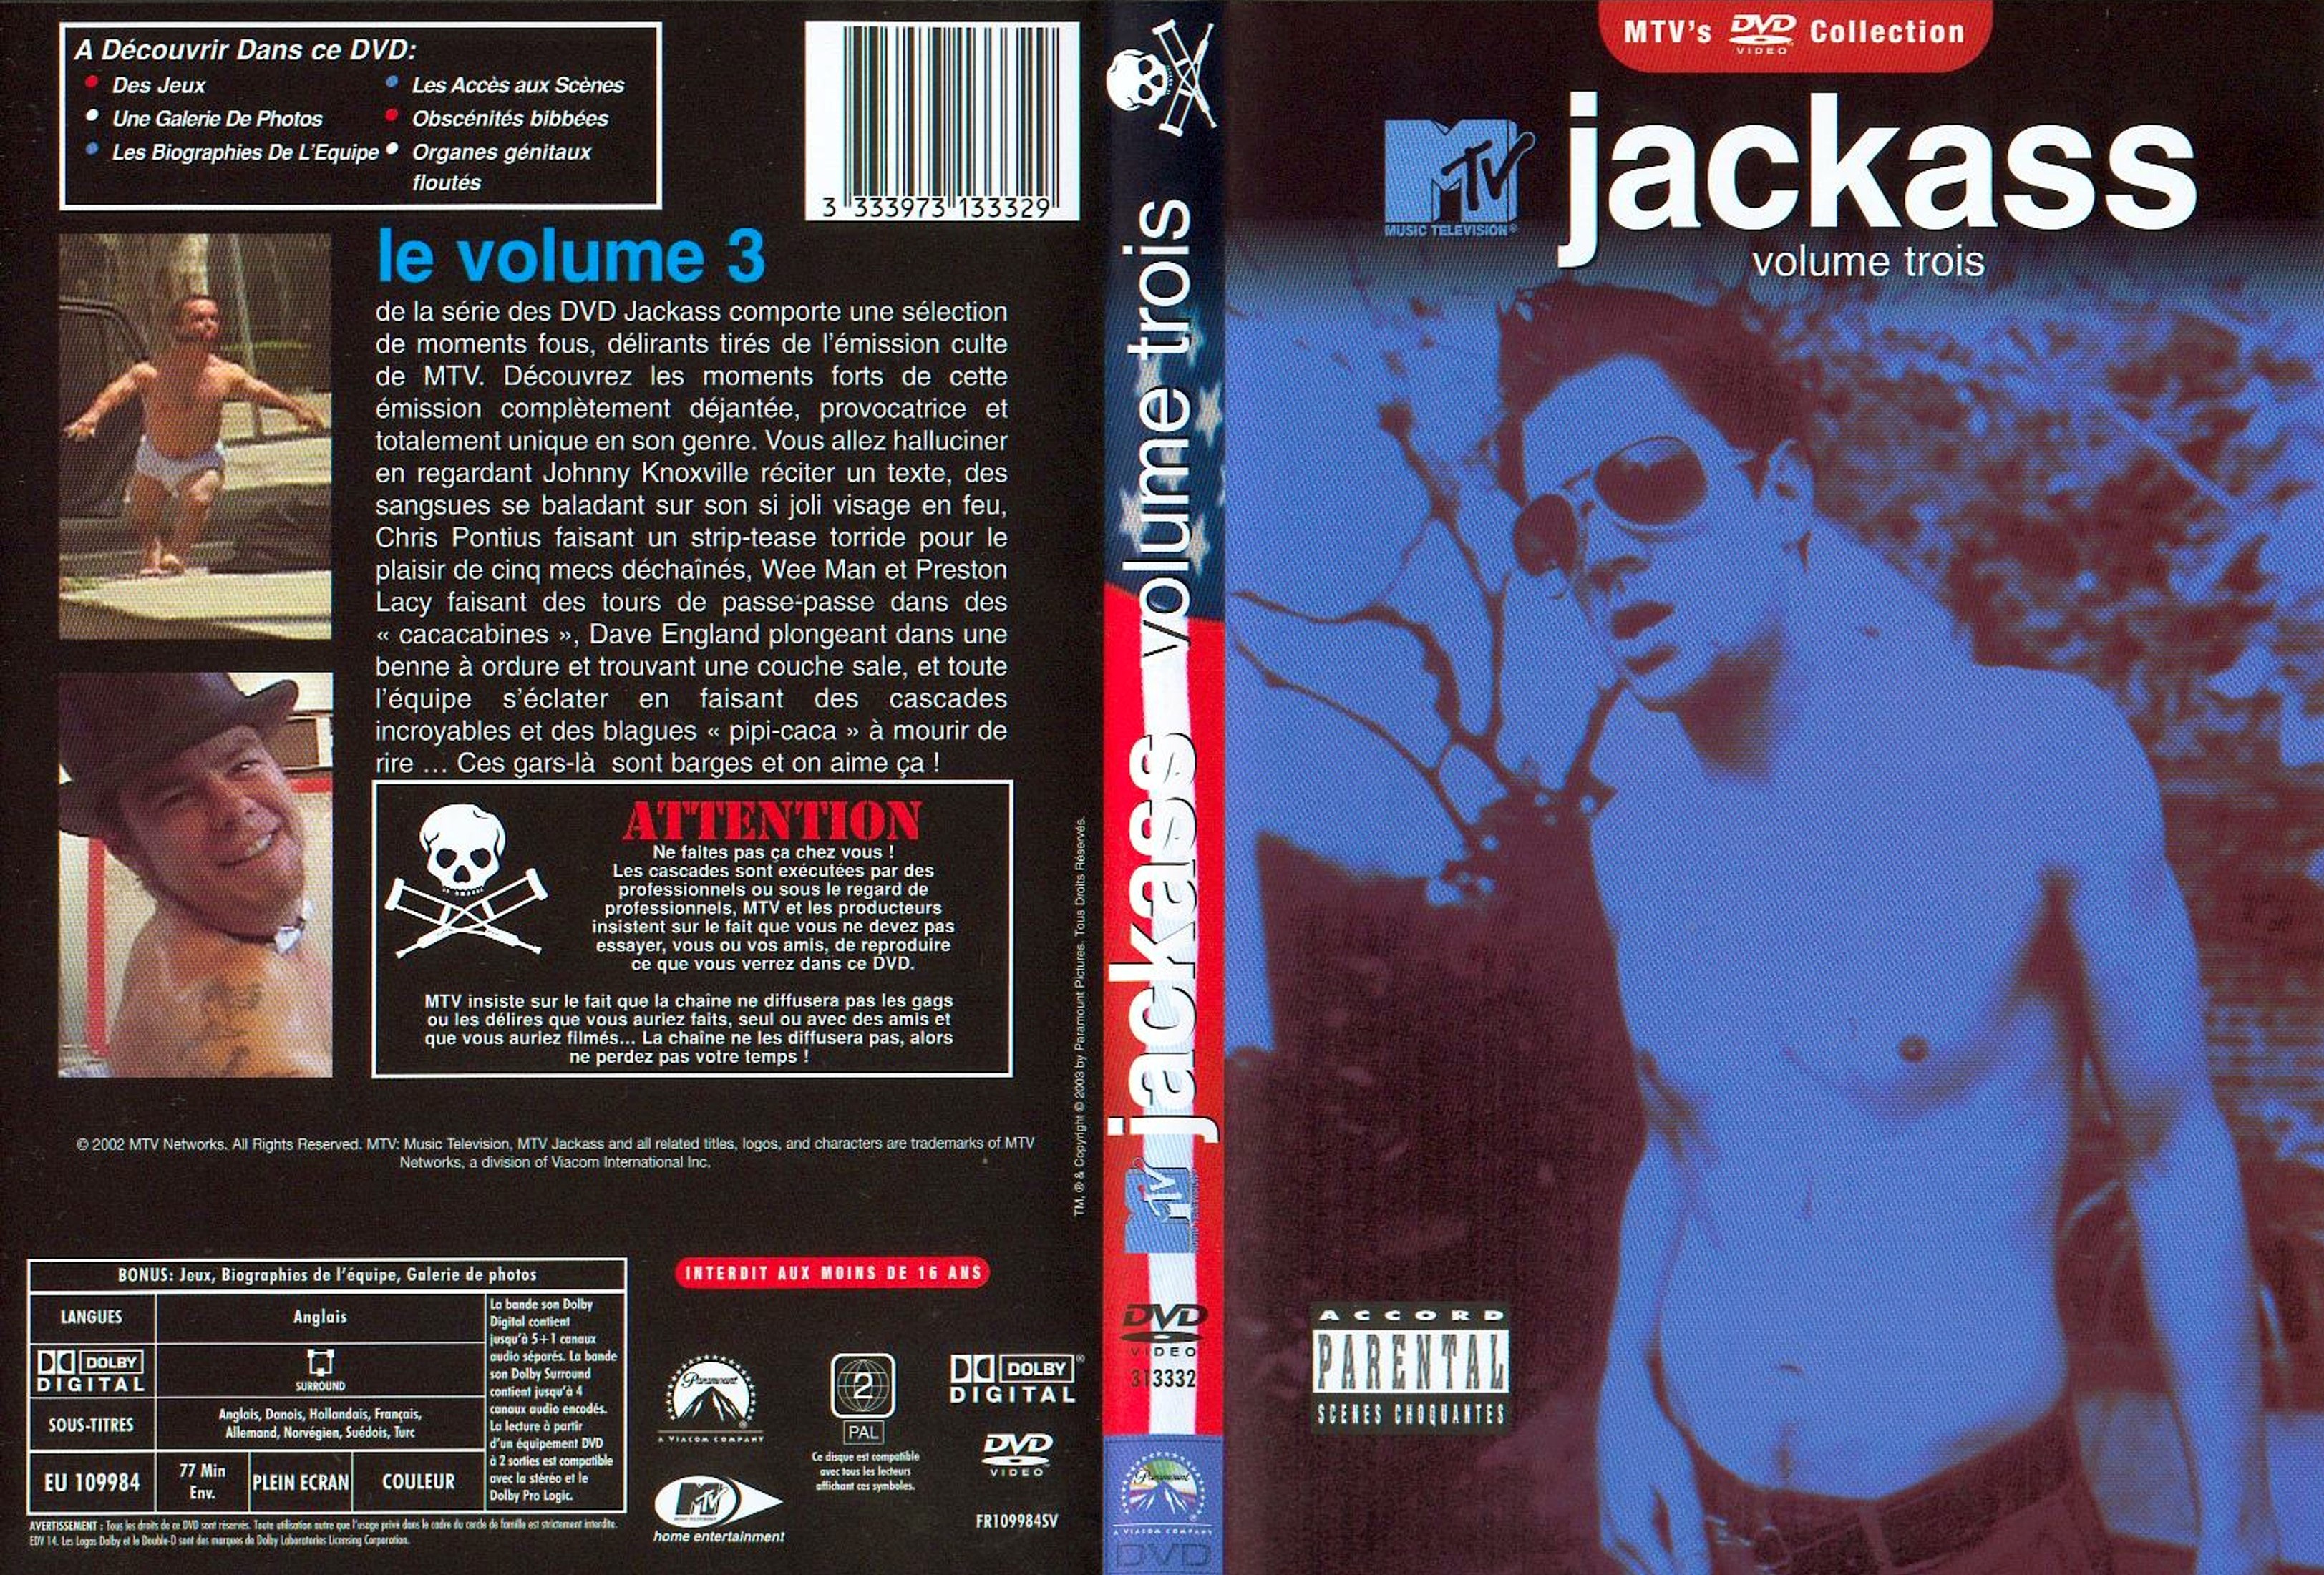 Jaquette DVD Jackass vol 3 v2